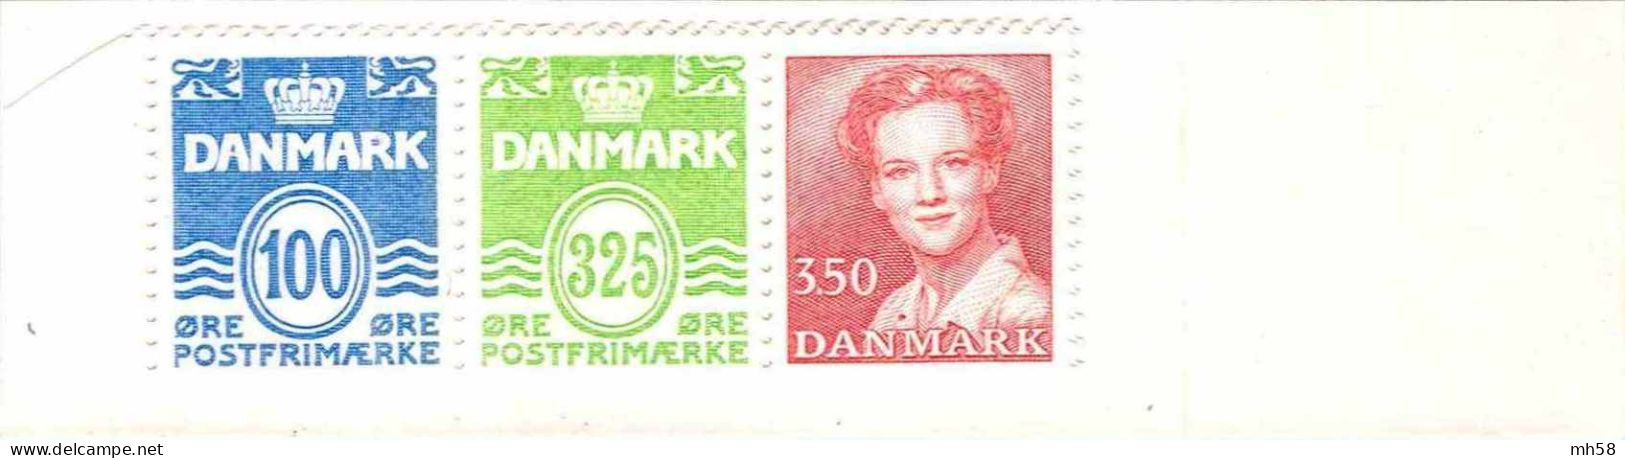 DANEMARK 1990 - Carnet / Booklet / MH Indice C10 - 10 Kr Chiffres / Reine Margarethe - YT C 966 I / MI MH 41 - Libretti